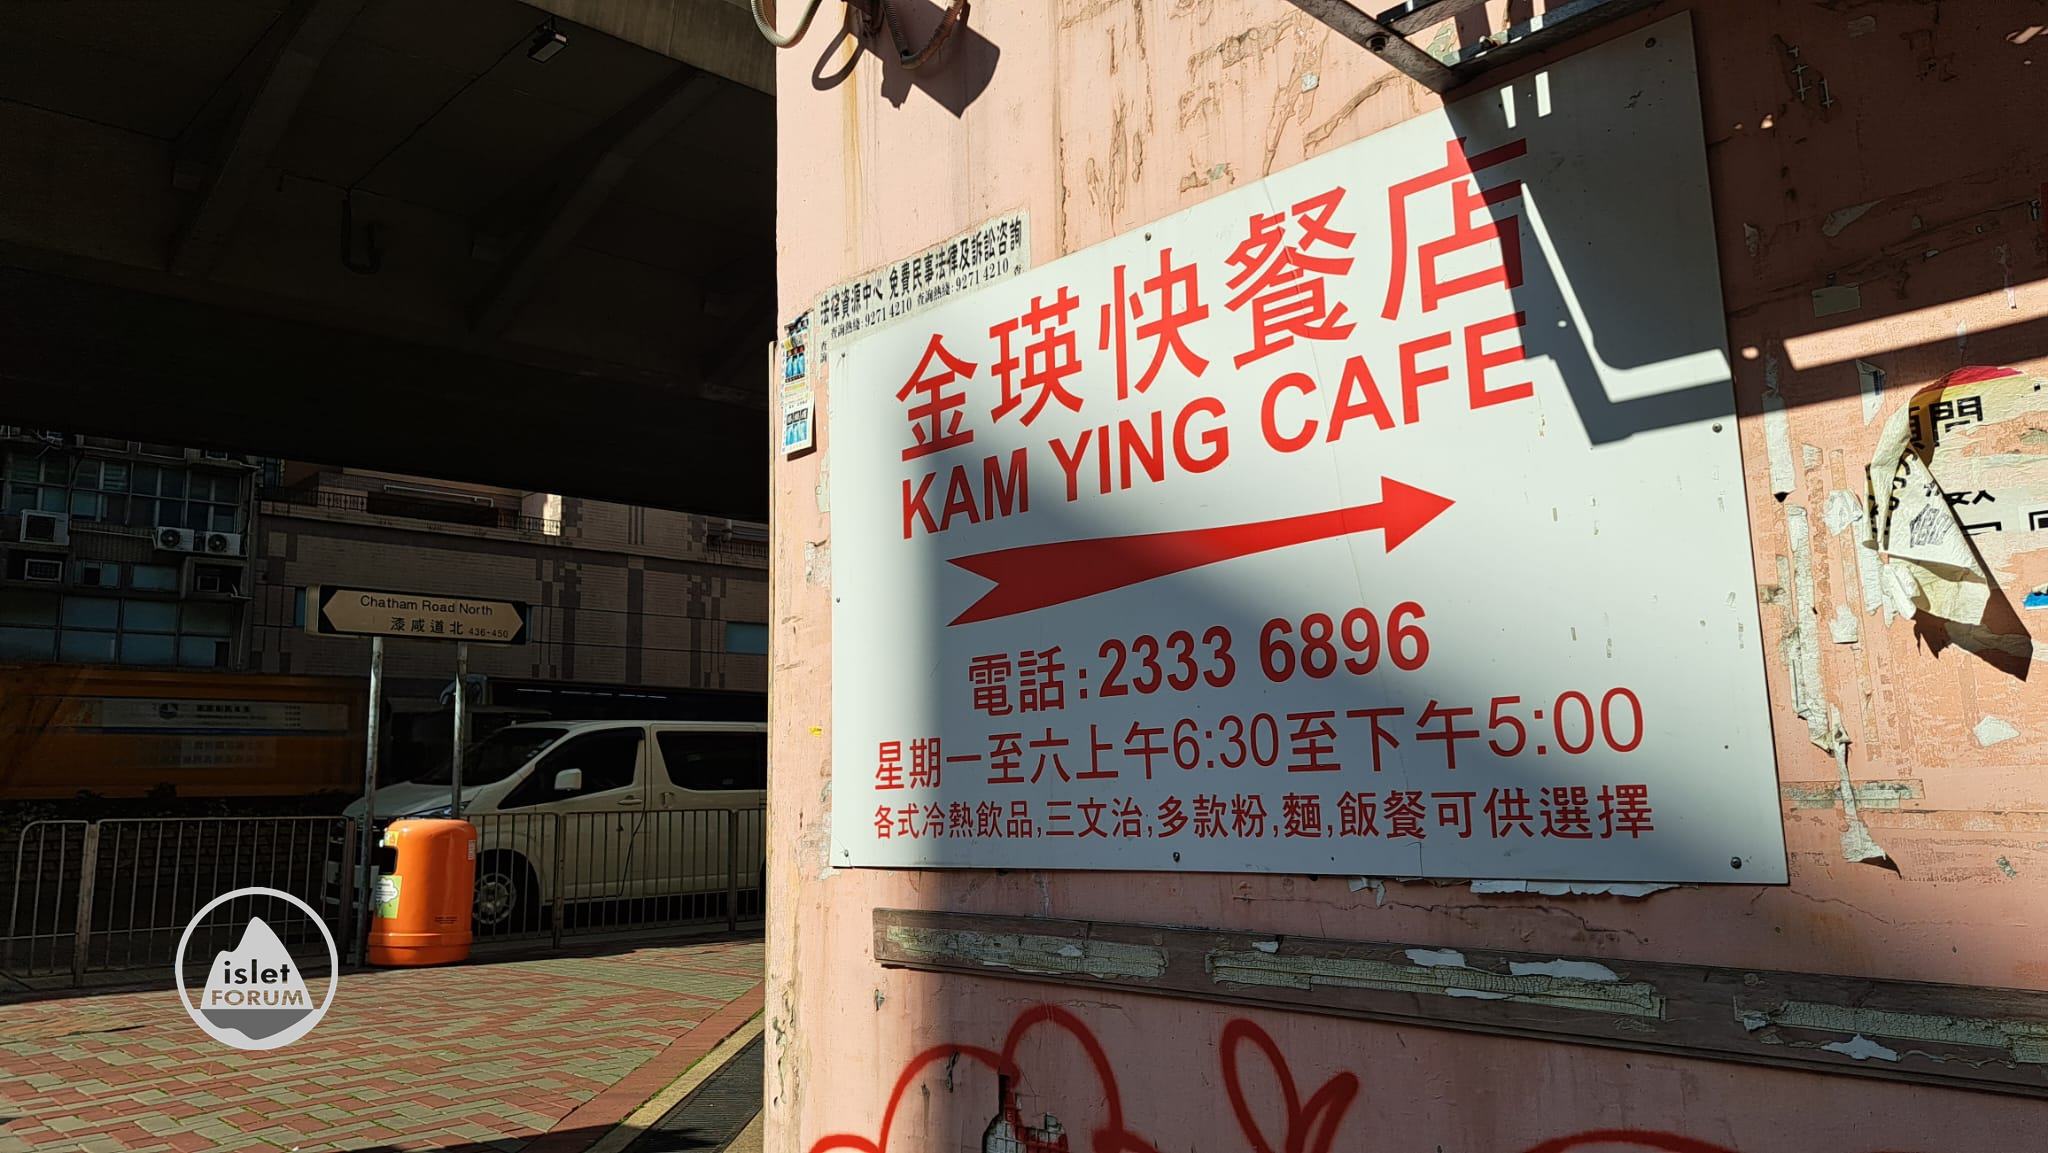 漆咸道金瑛快餐店 Kam Ying Cafe (1).jpeg